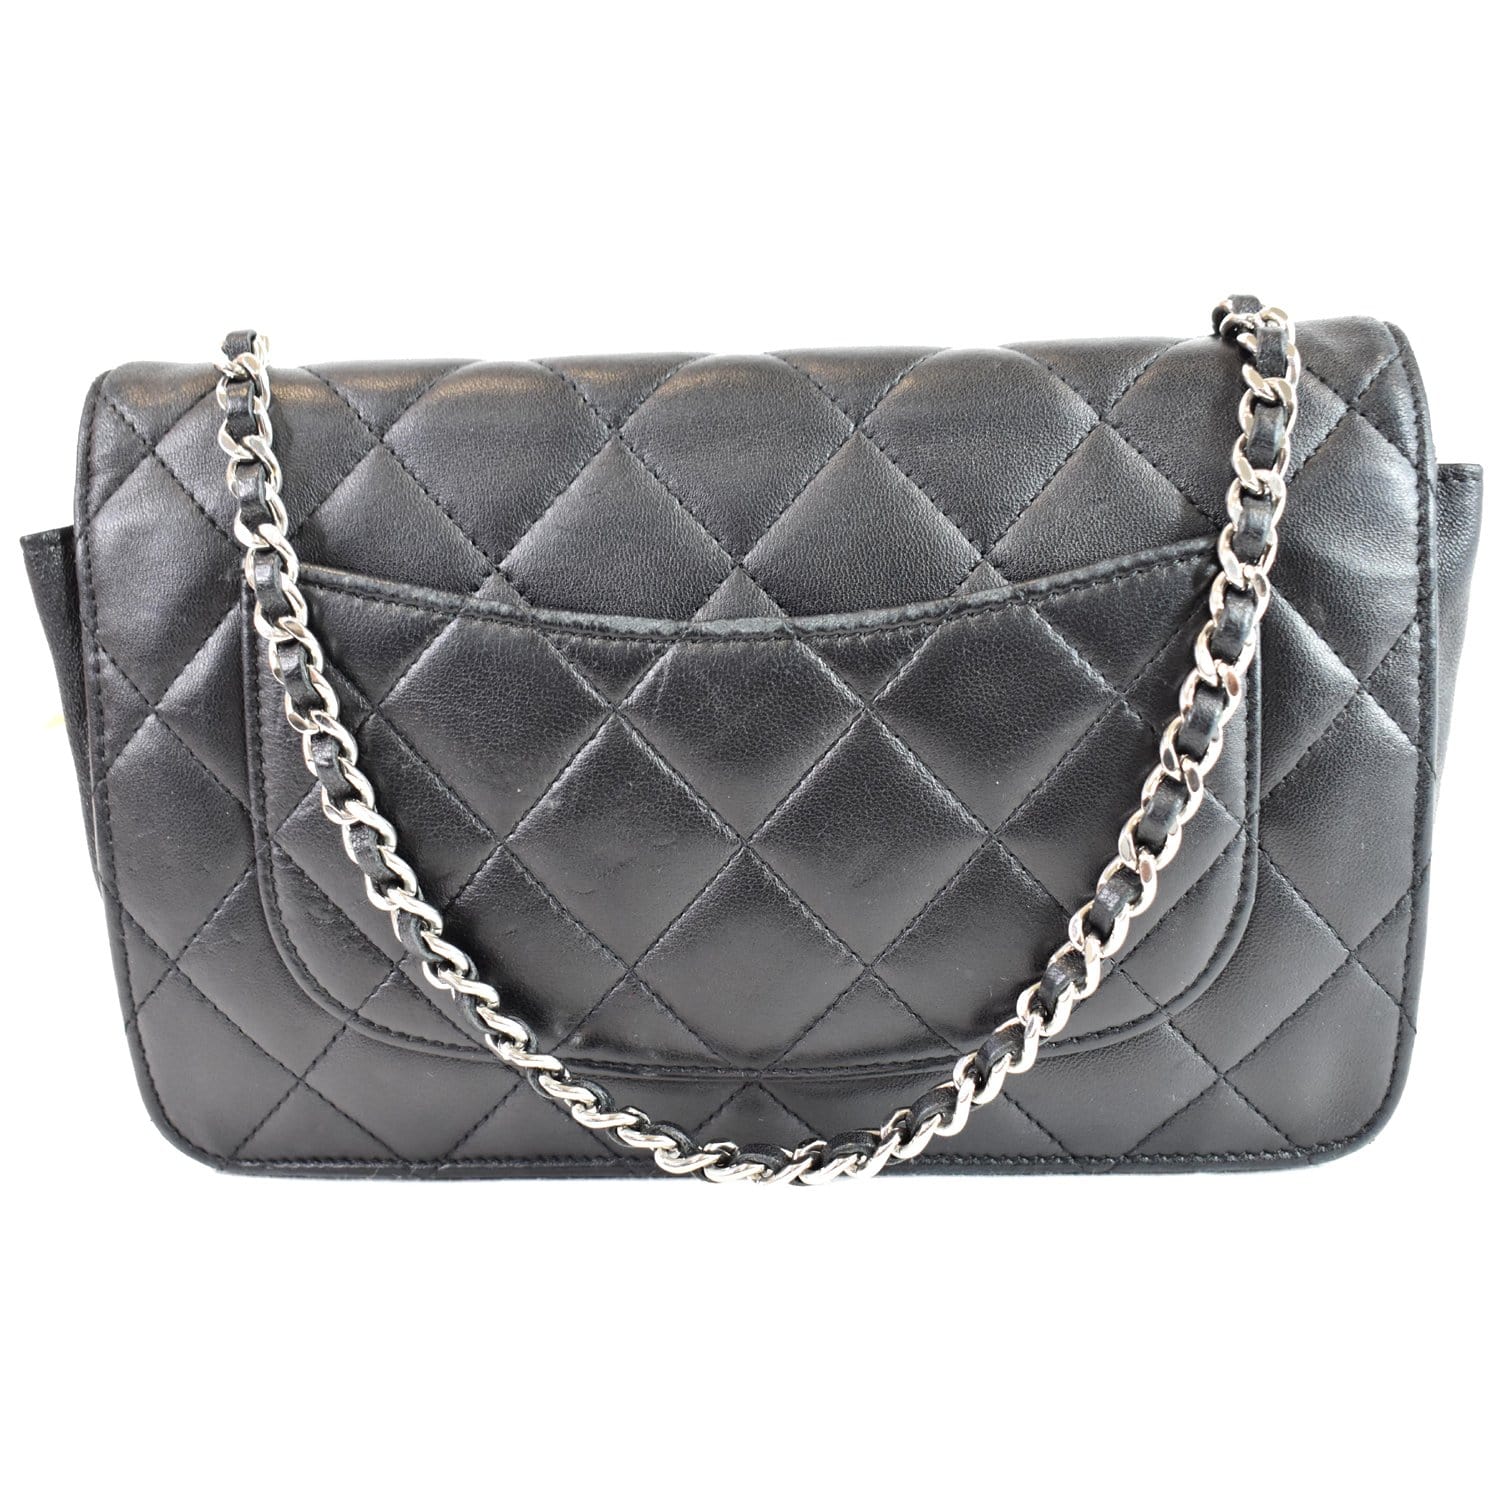 Chanel Wallet On Chain Lambskin Leather Crossbody Bag